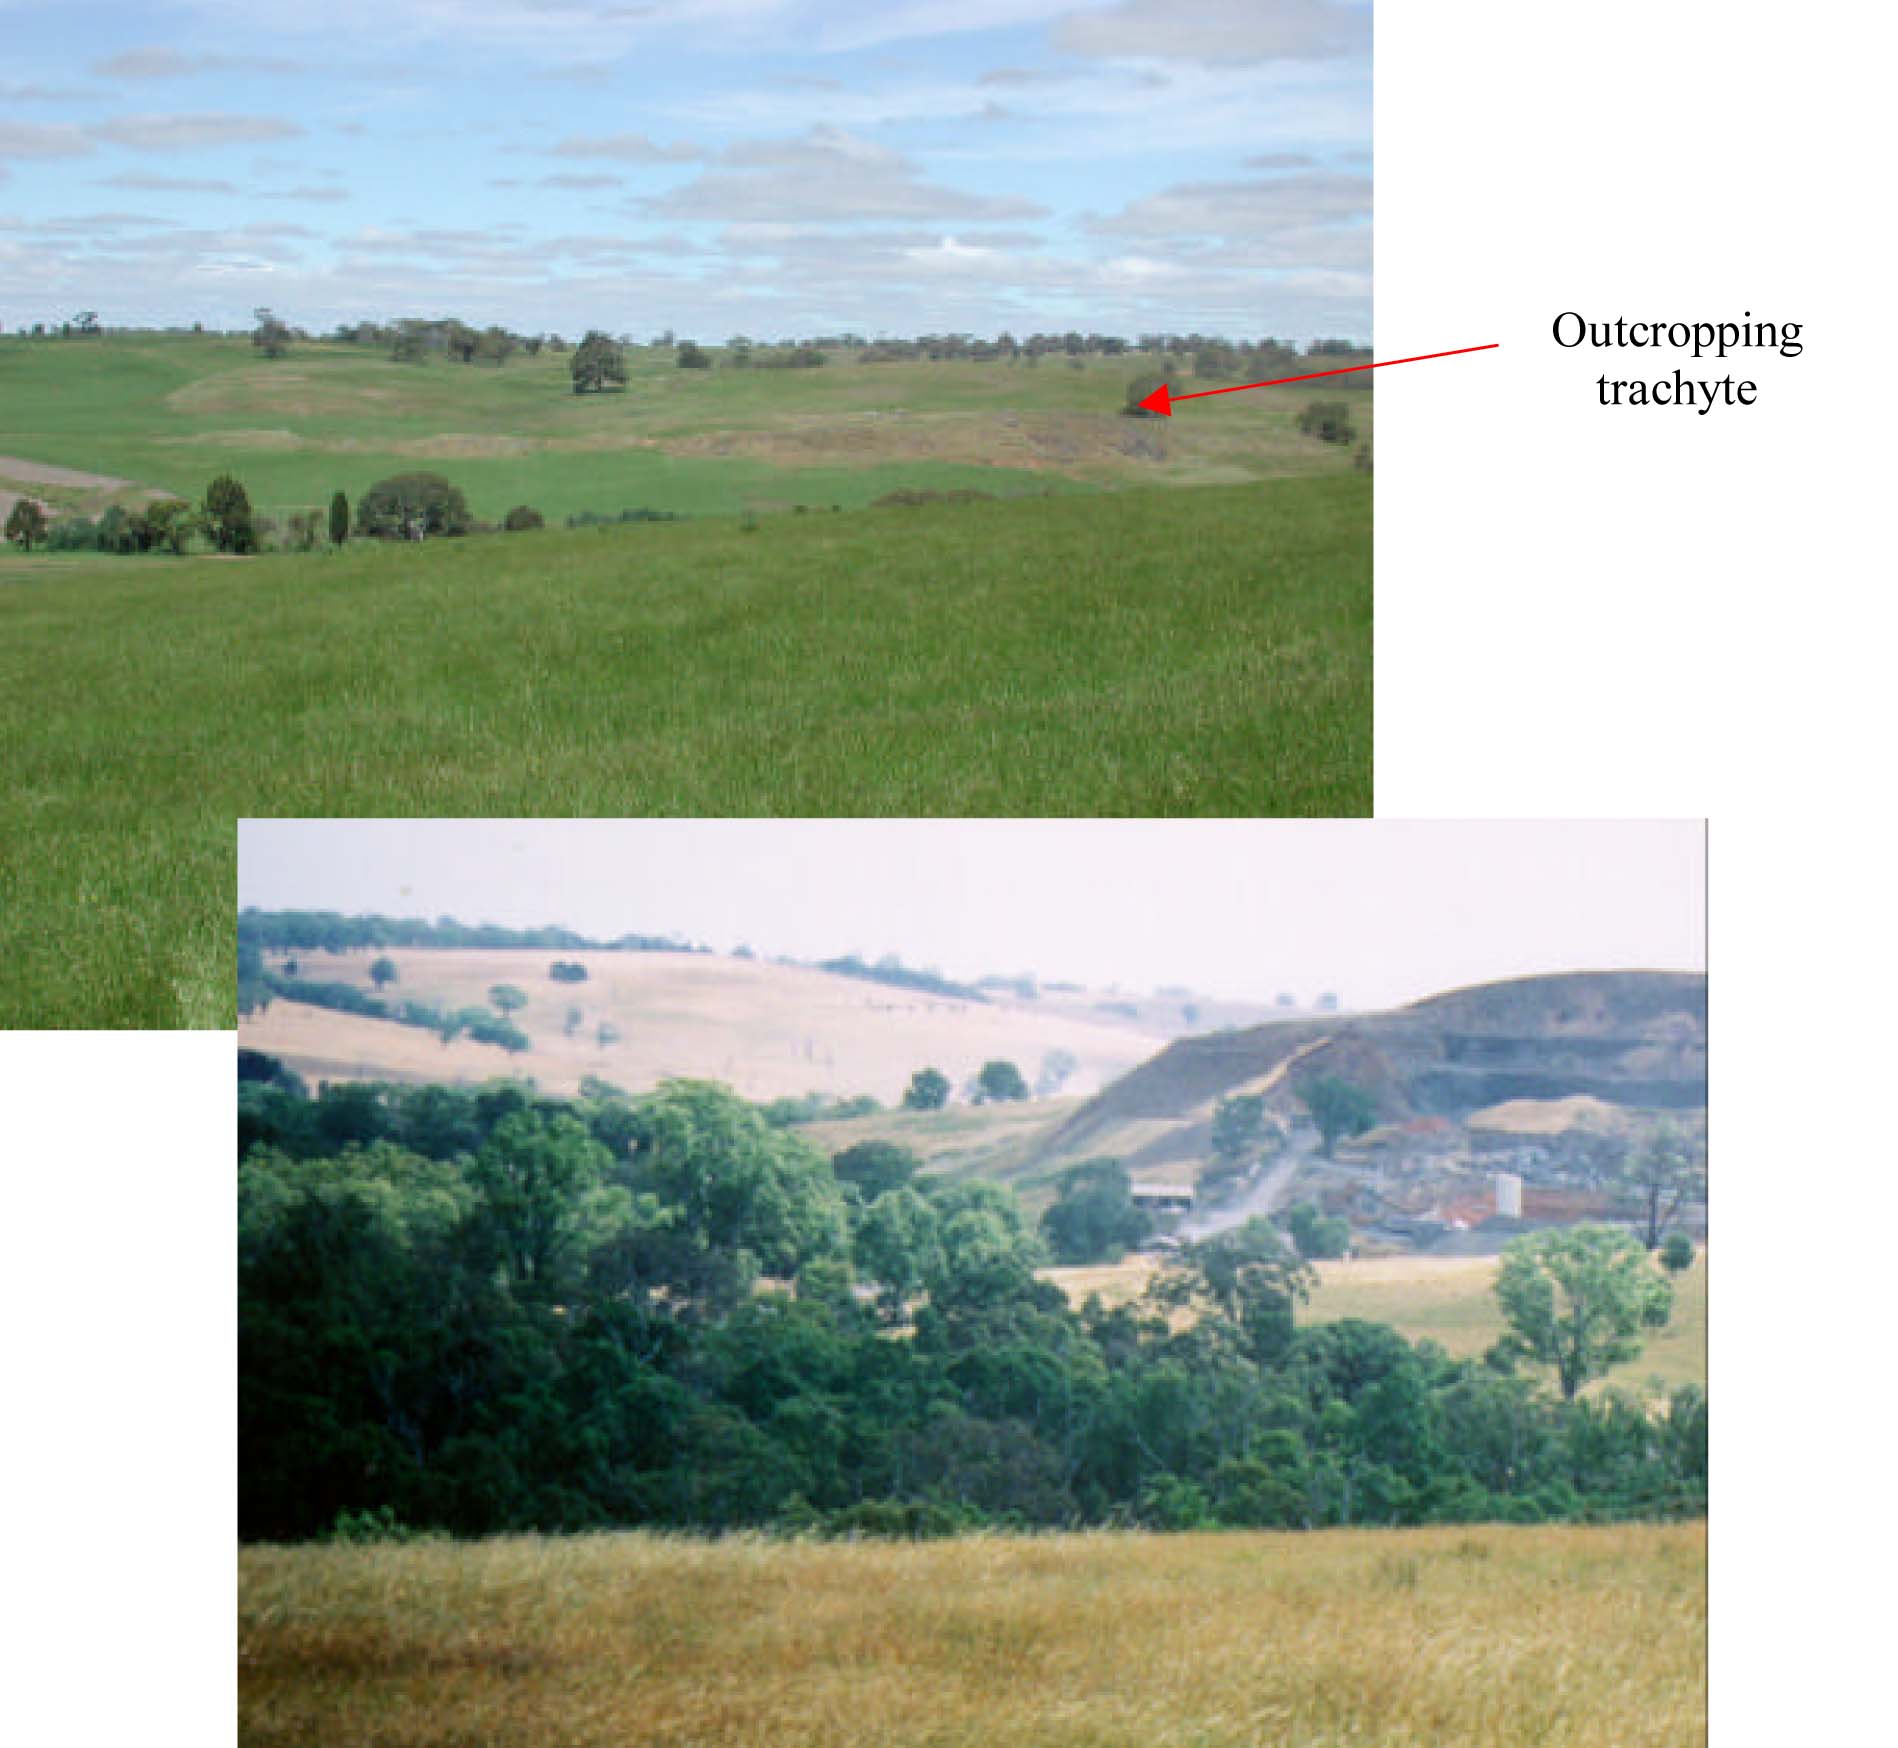 Glenelg Land Resource Assessment - Land Unit System - Dundas trachyte